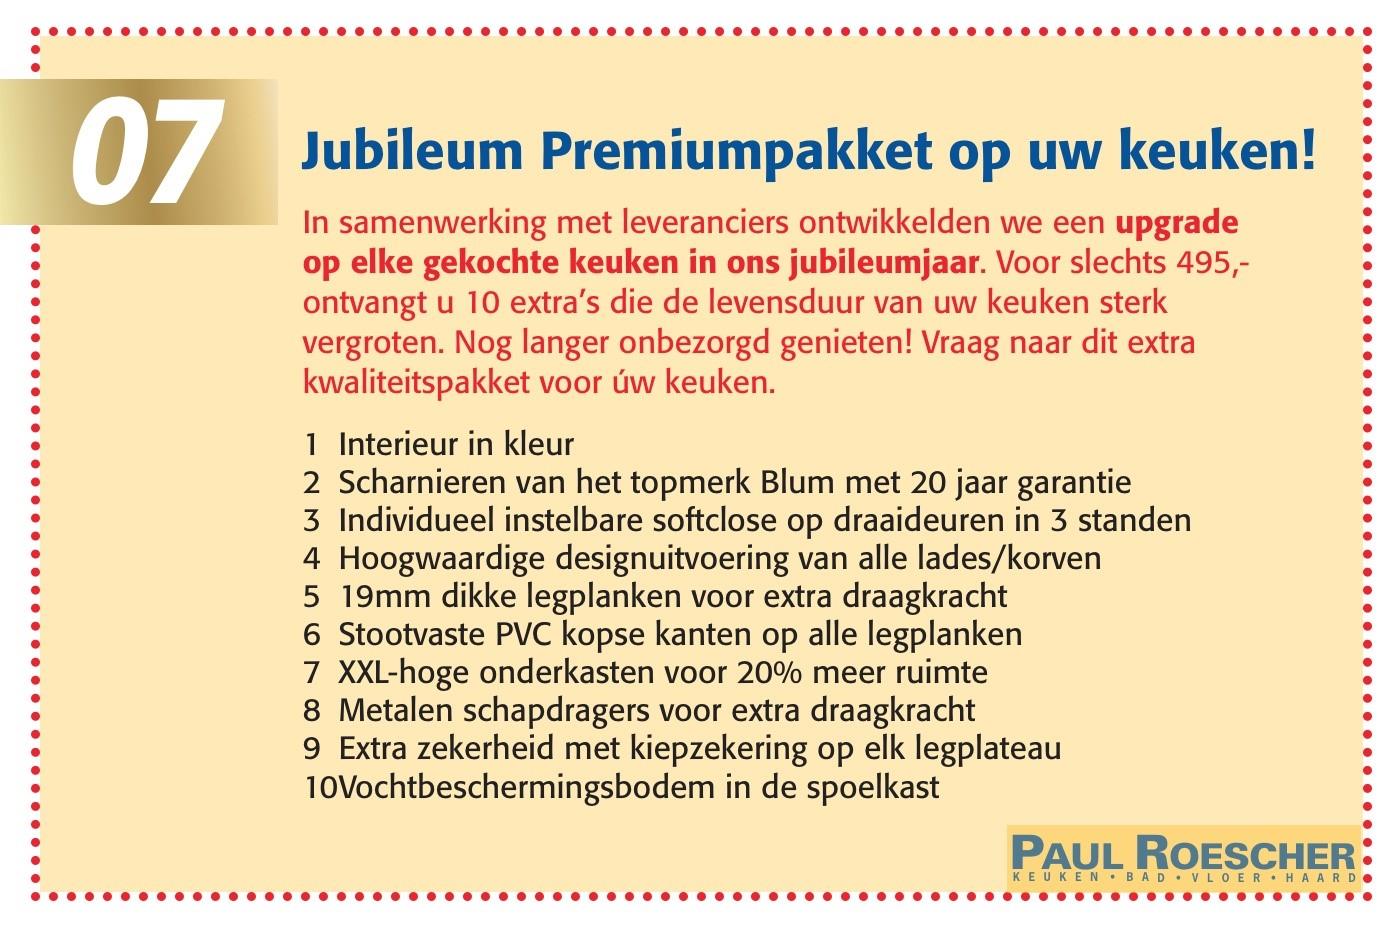 Jubileum Premiumpakket keuken